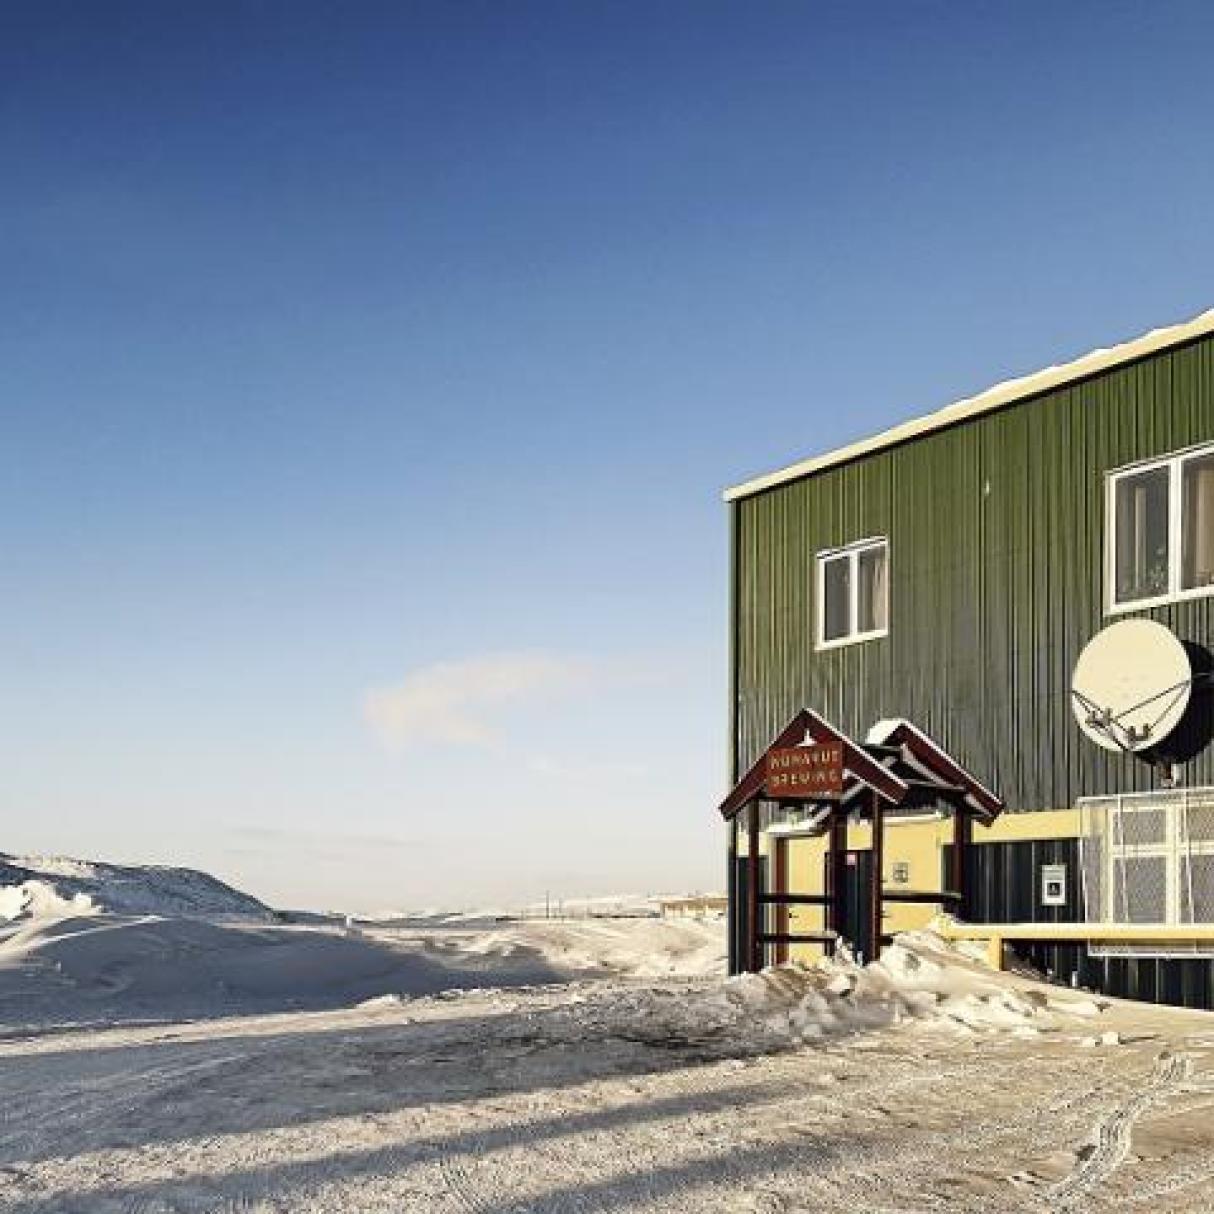 The exterior of Nunavut Brewing